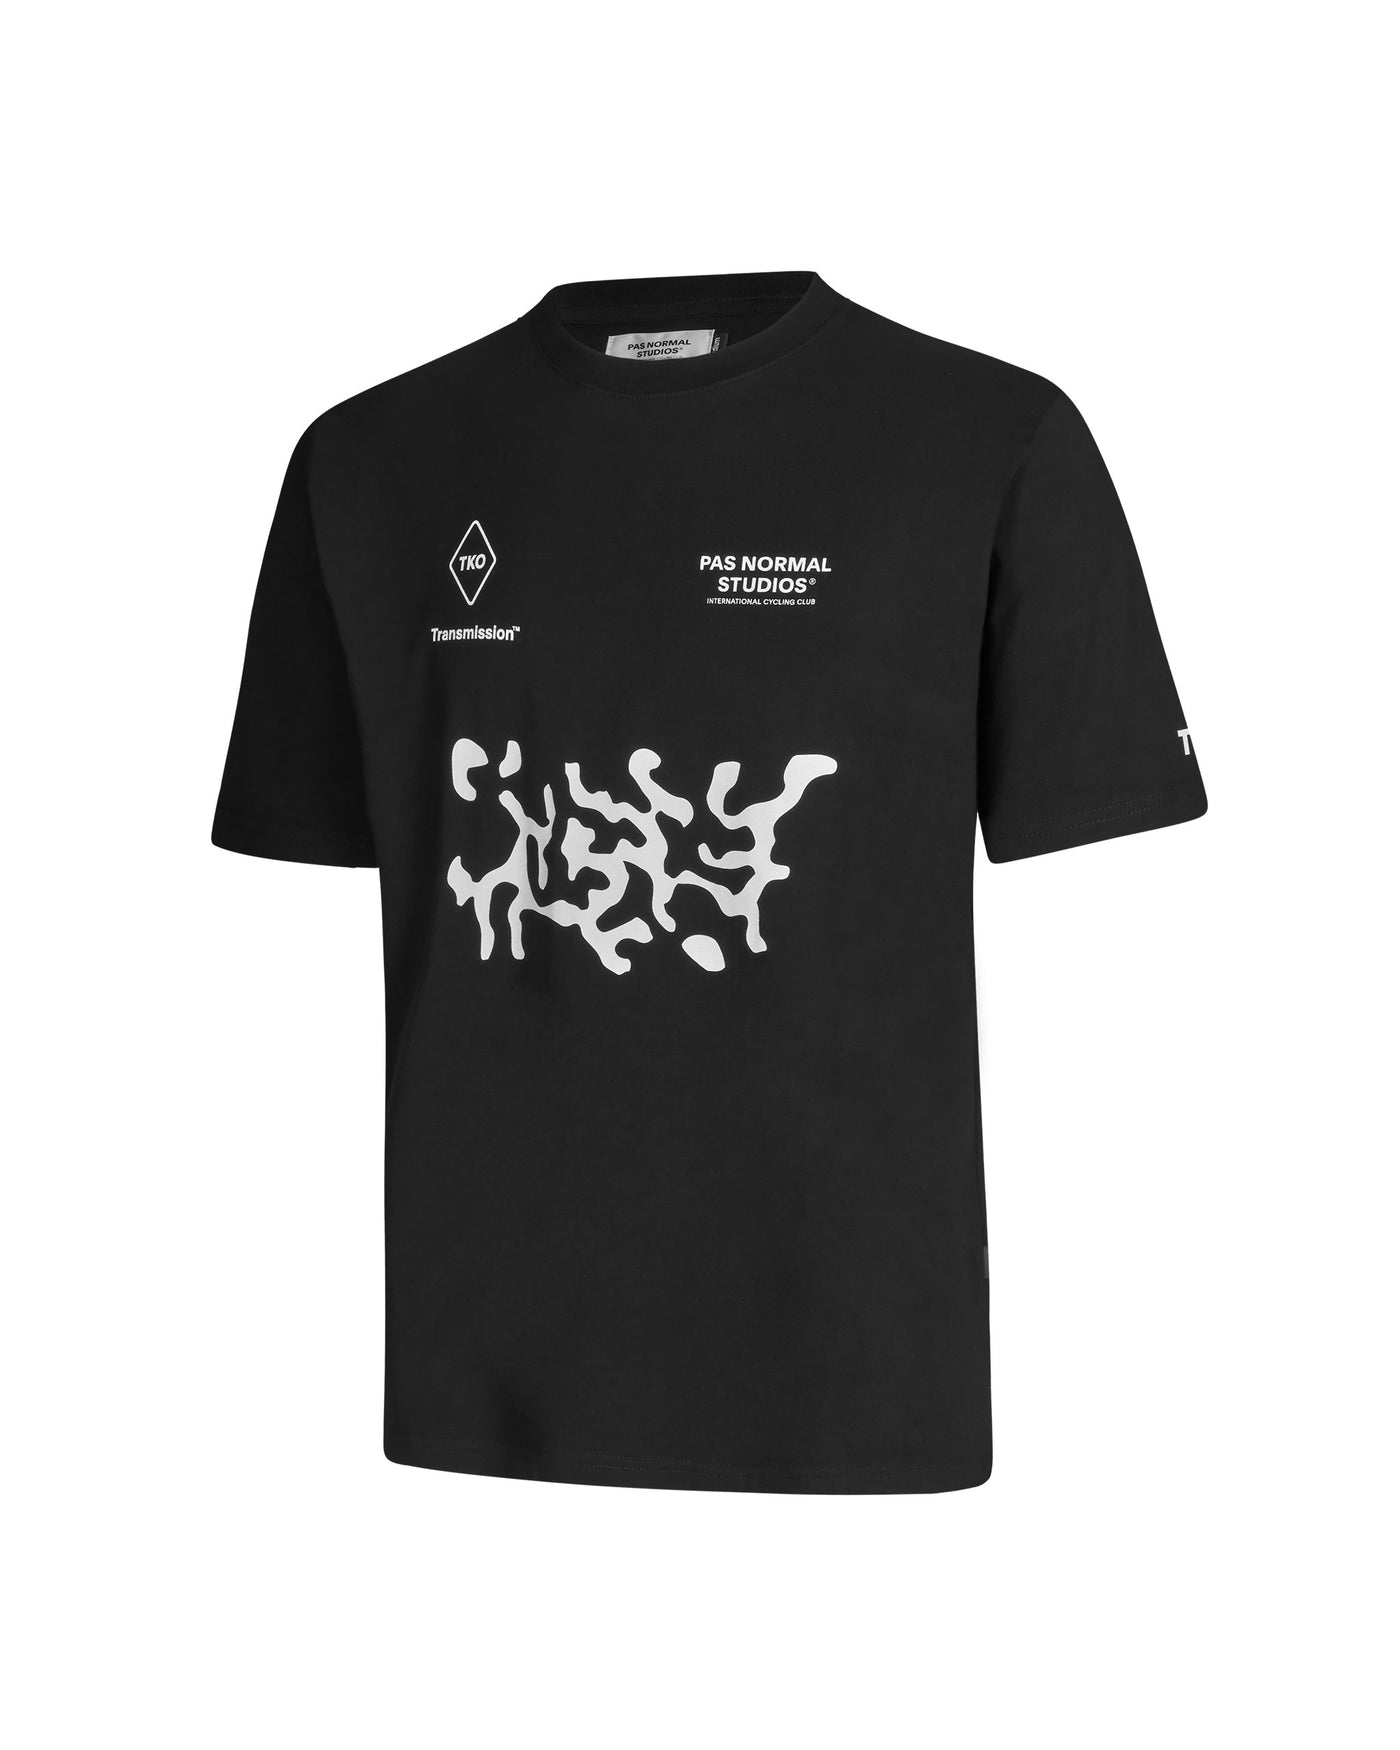 T.K.O. Transmission T-Shirt